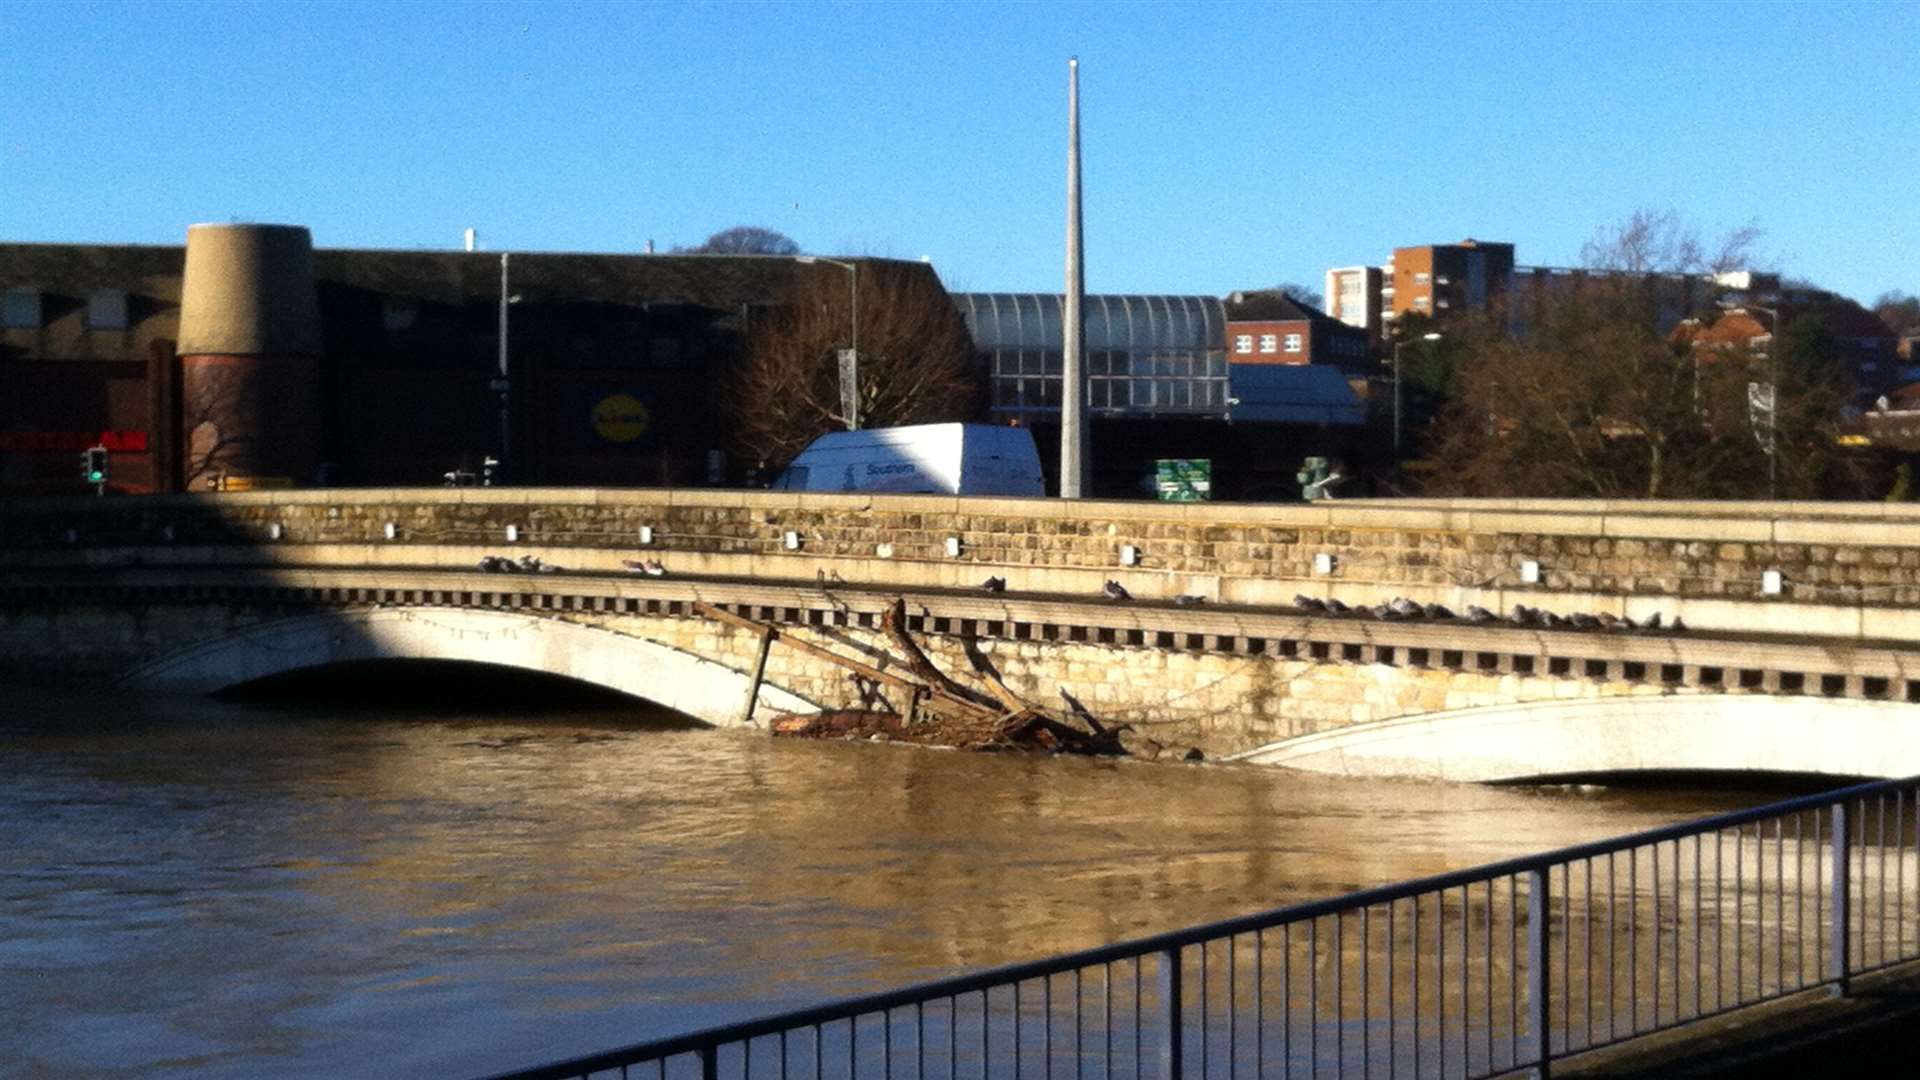 Parts of Maidstone town centre were left underwater